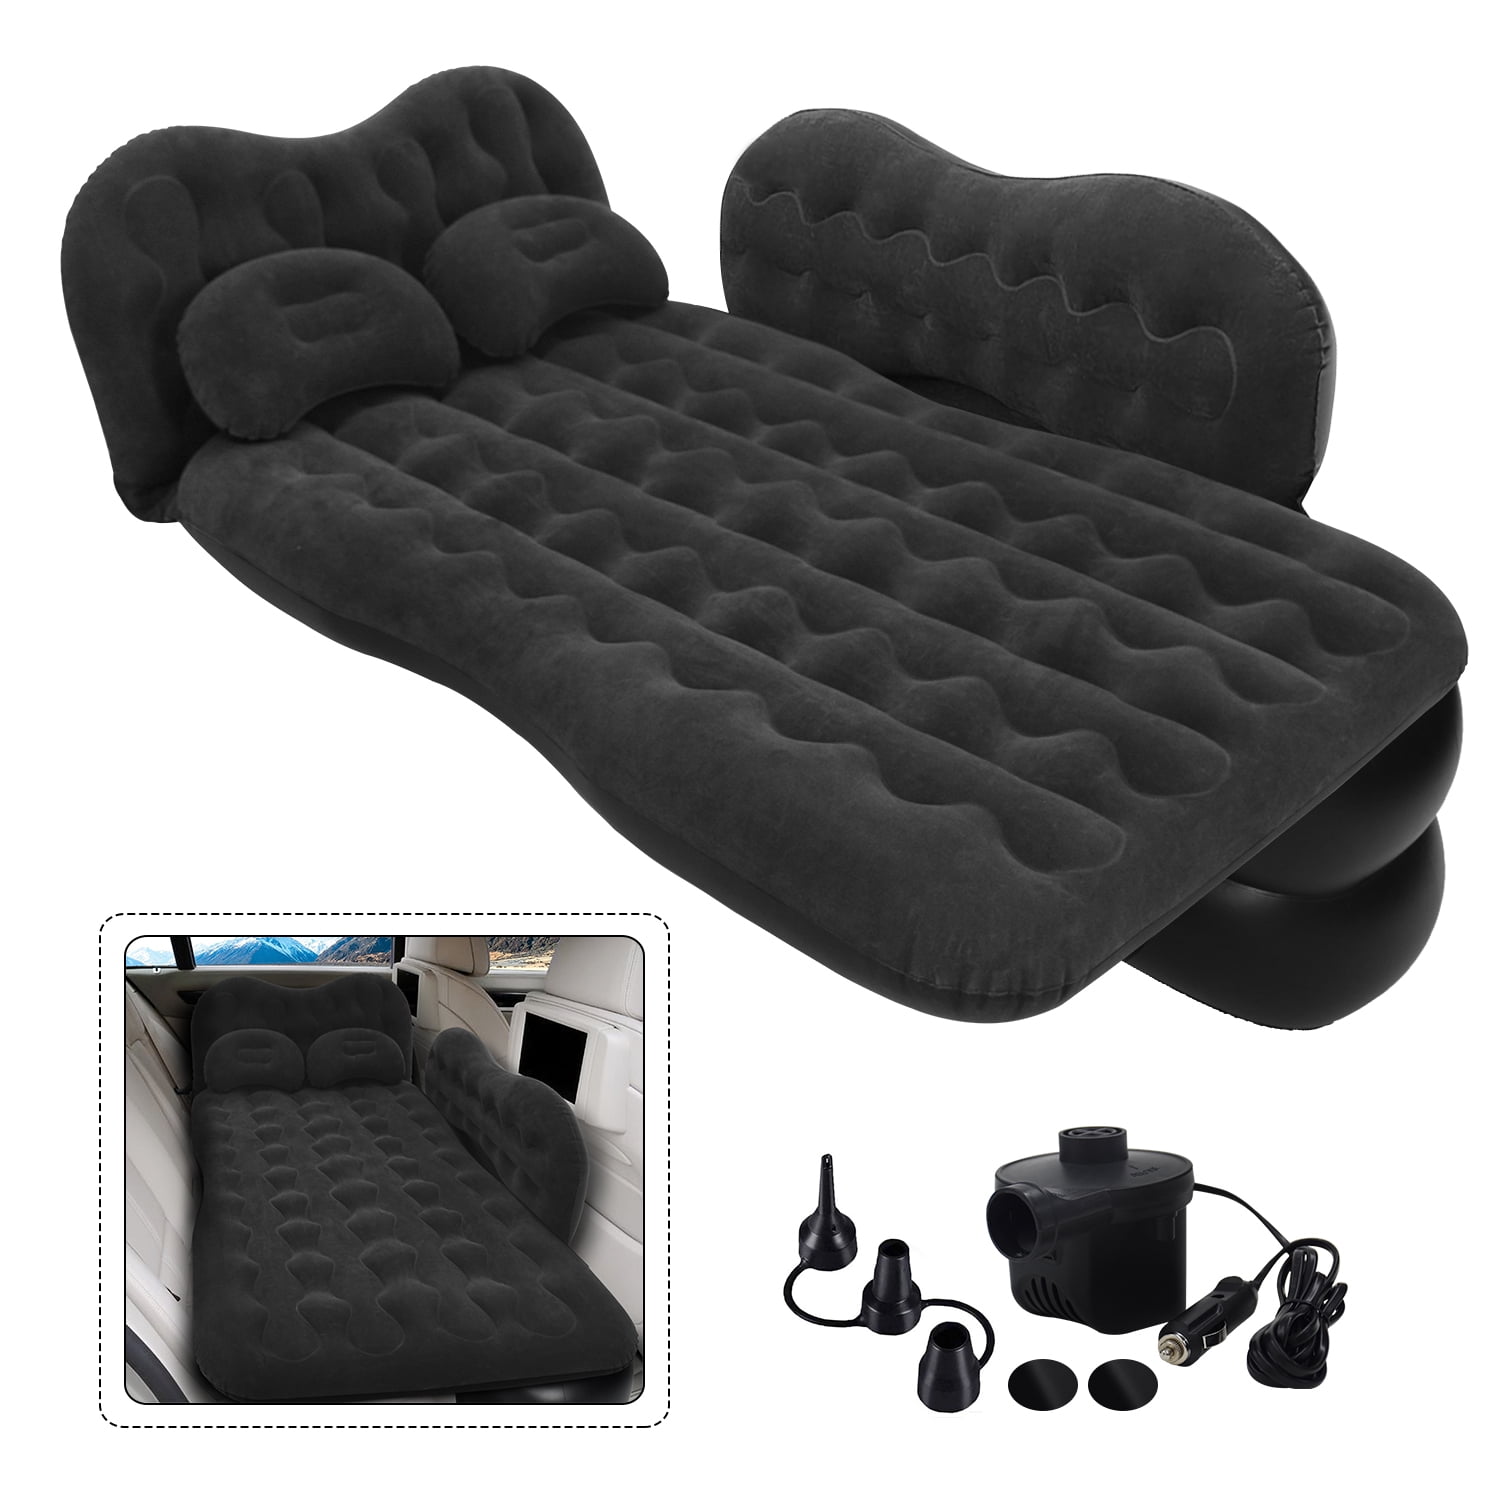 Car Air Bed Inflatable Mattress Travel Sleeping Camping Cushion Back Seat Pads 